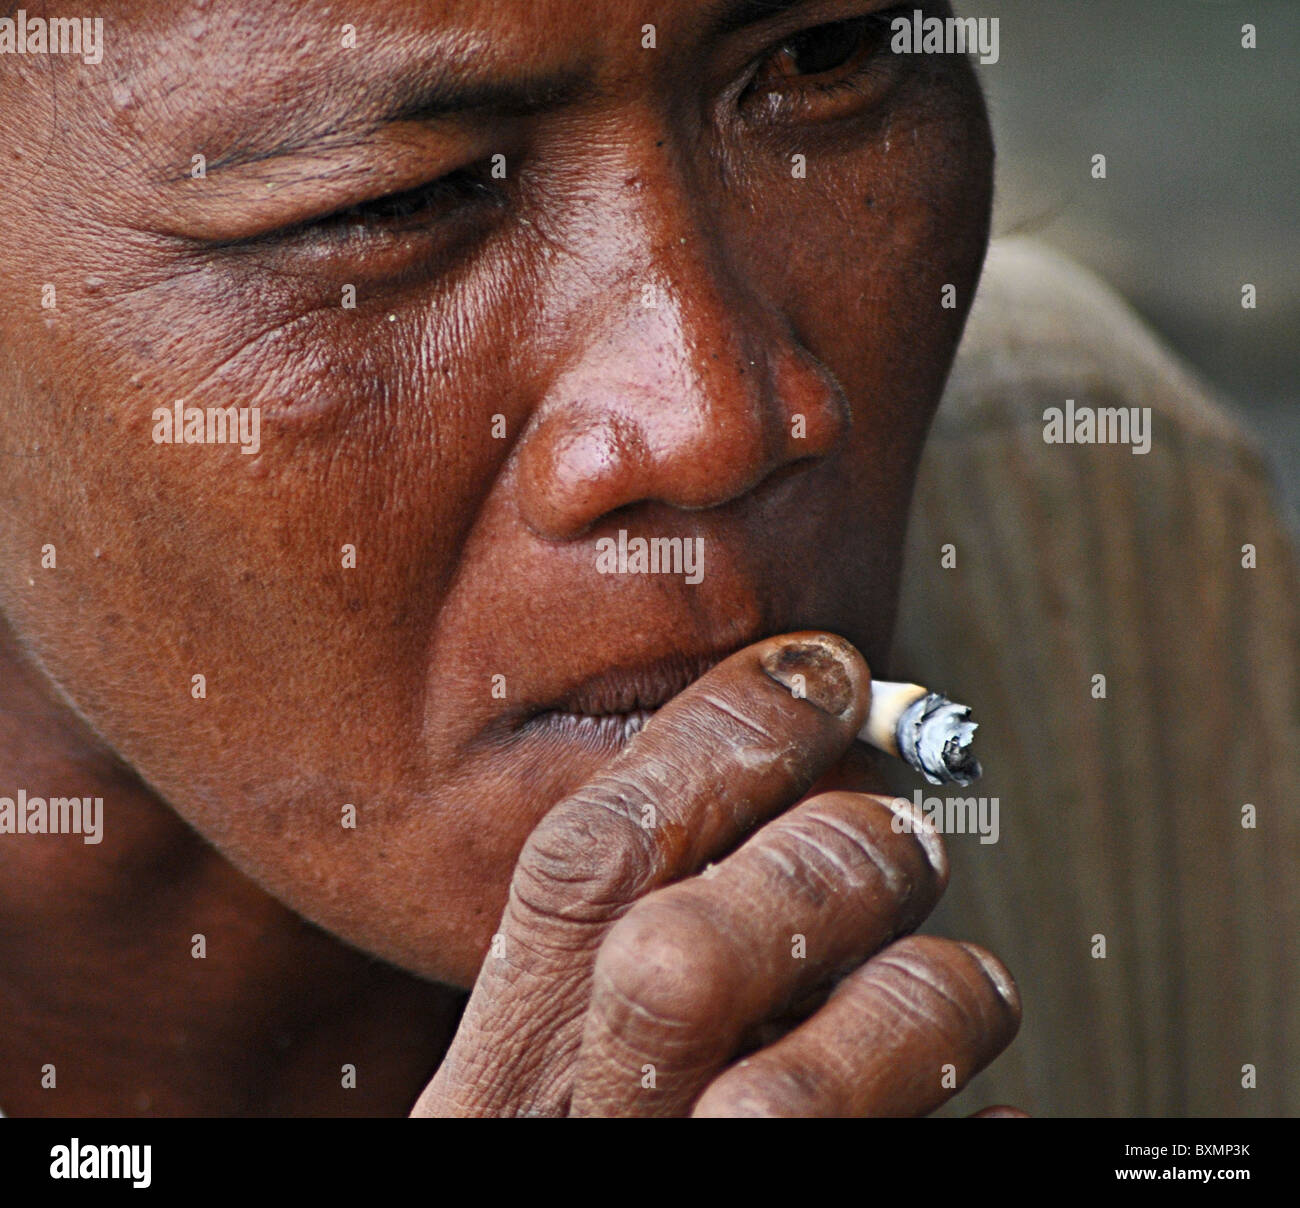 Femme cambodgienne cigarette Banque D'Images